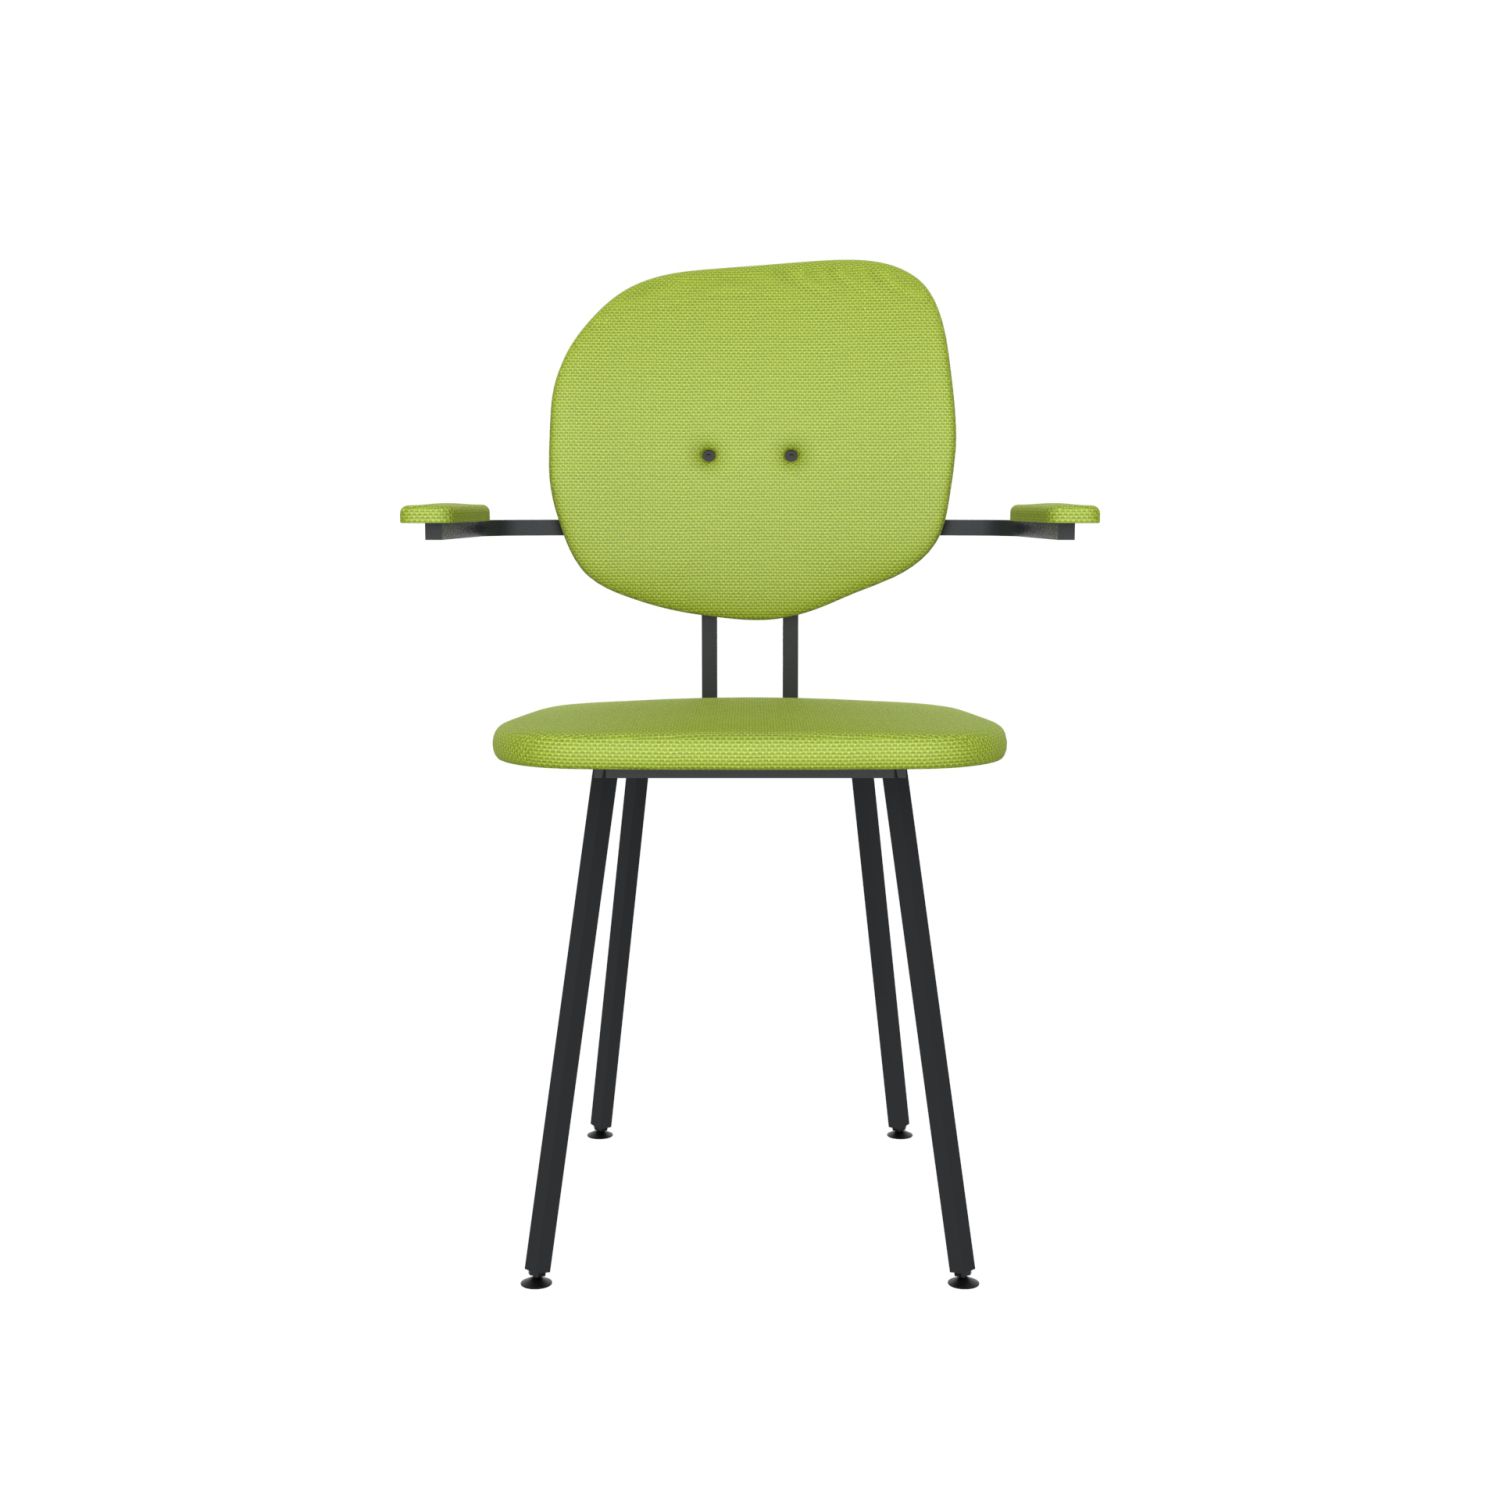 lensvelt maarten baas chair 102 not stackable with armrests backrest h fairway green 020 black ral9005 hard leg ends